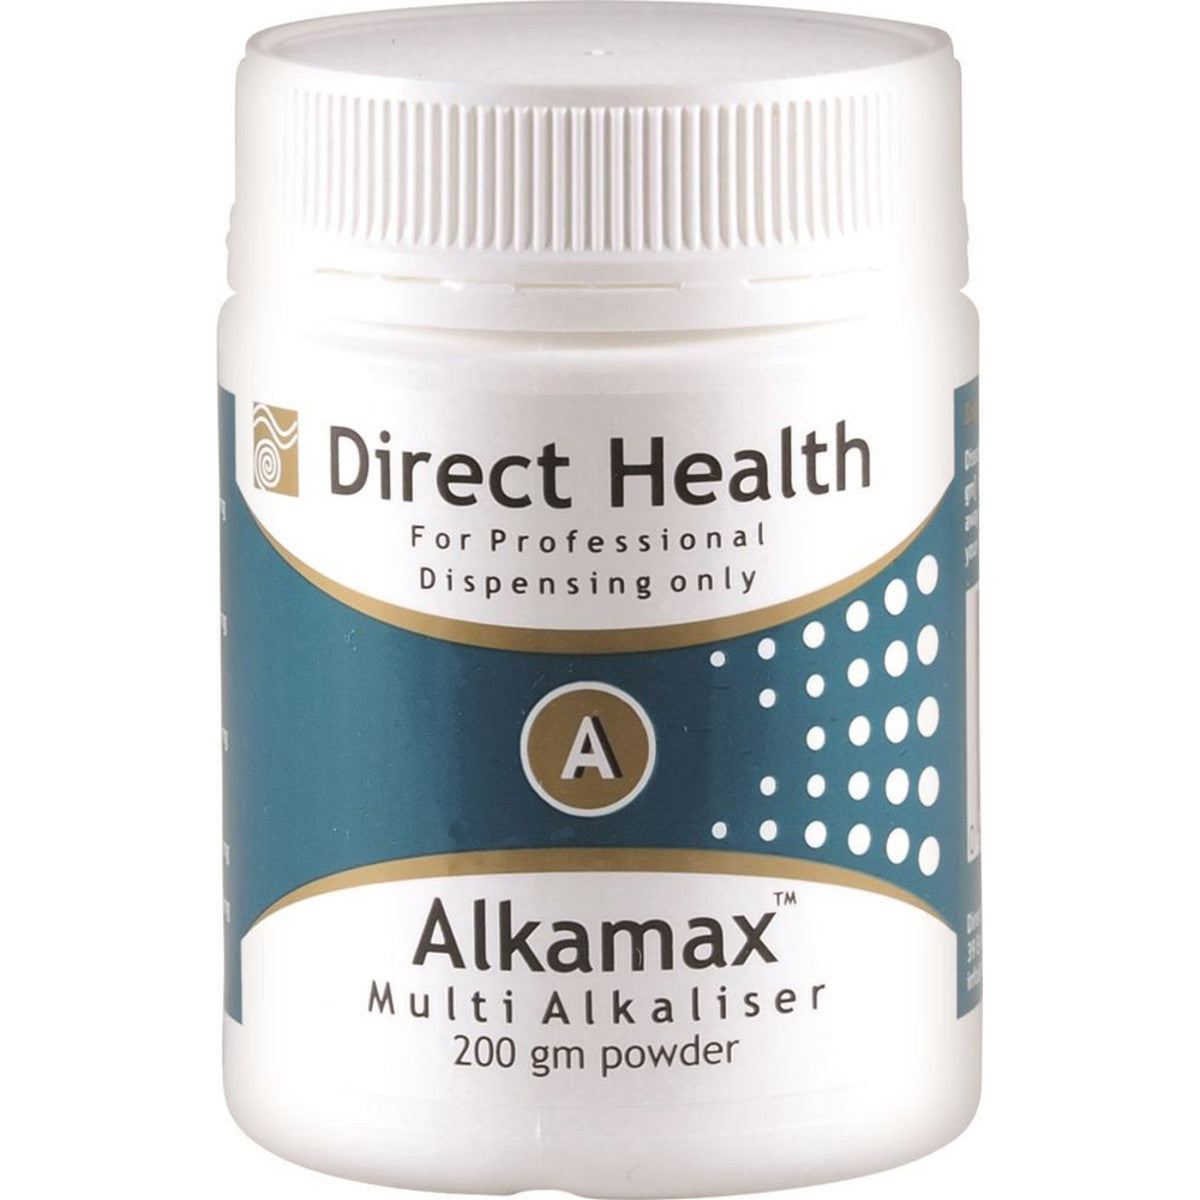 Direct Health - Alkamax